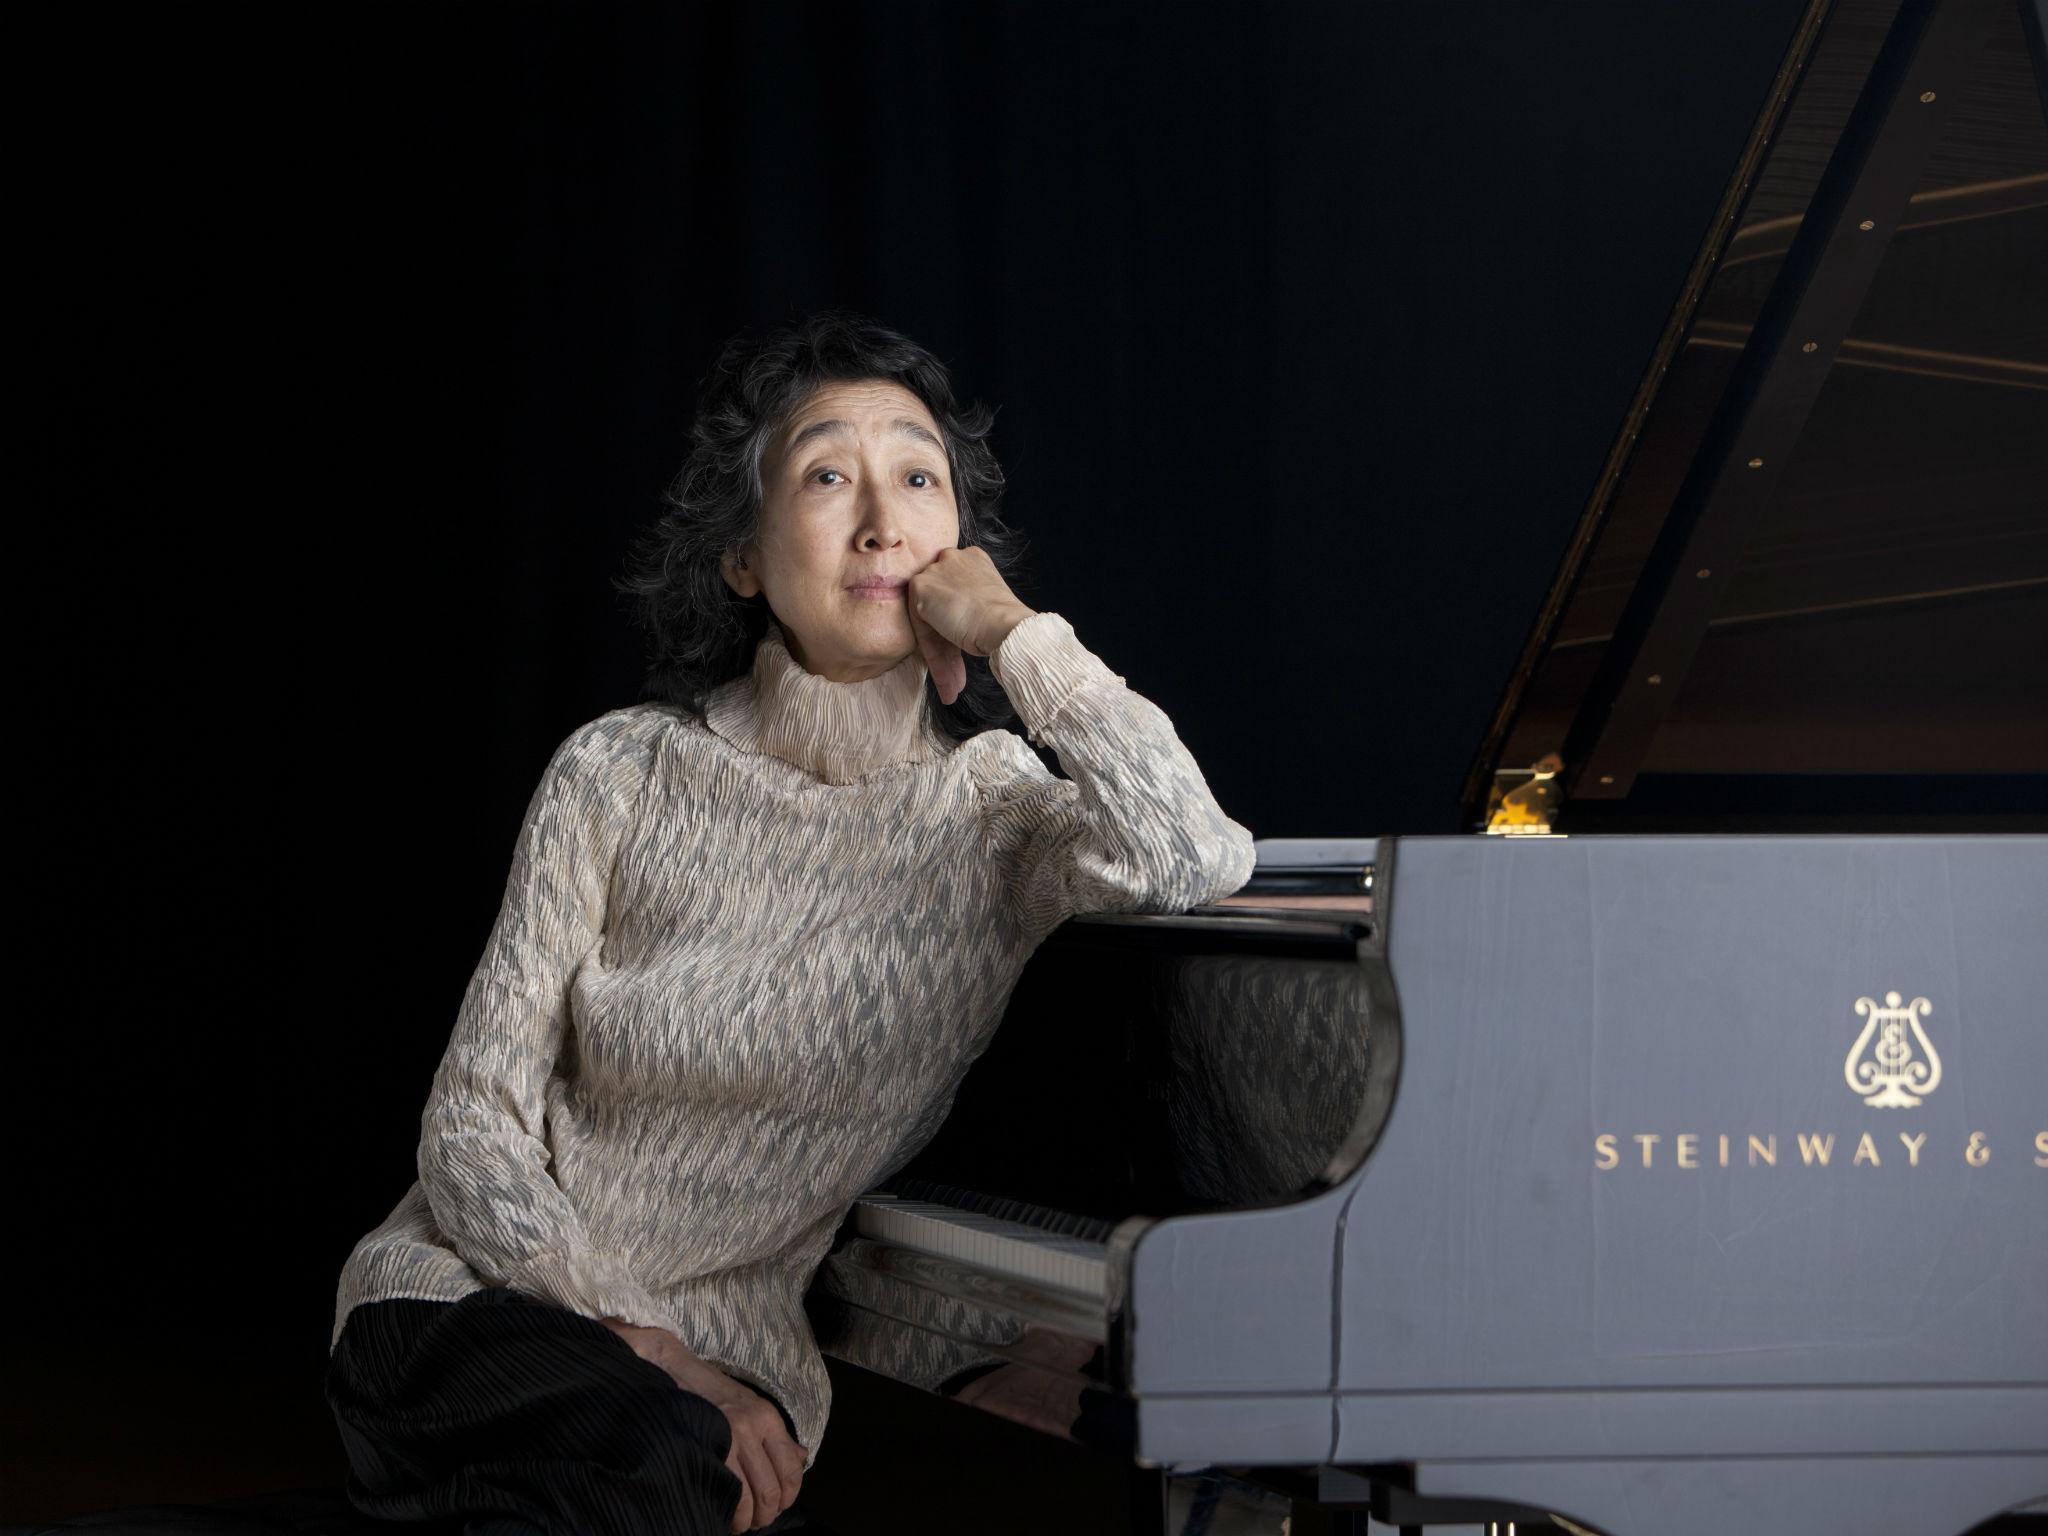 Scaling back: Mitsuko Uchida has mastered the piano’s most simple key